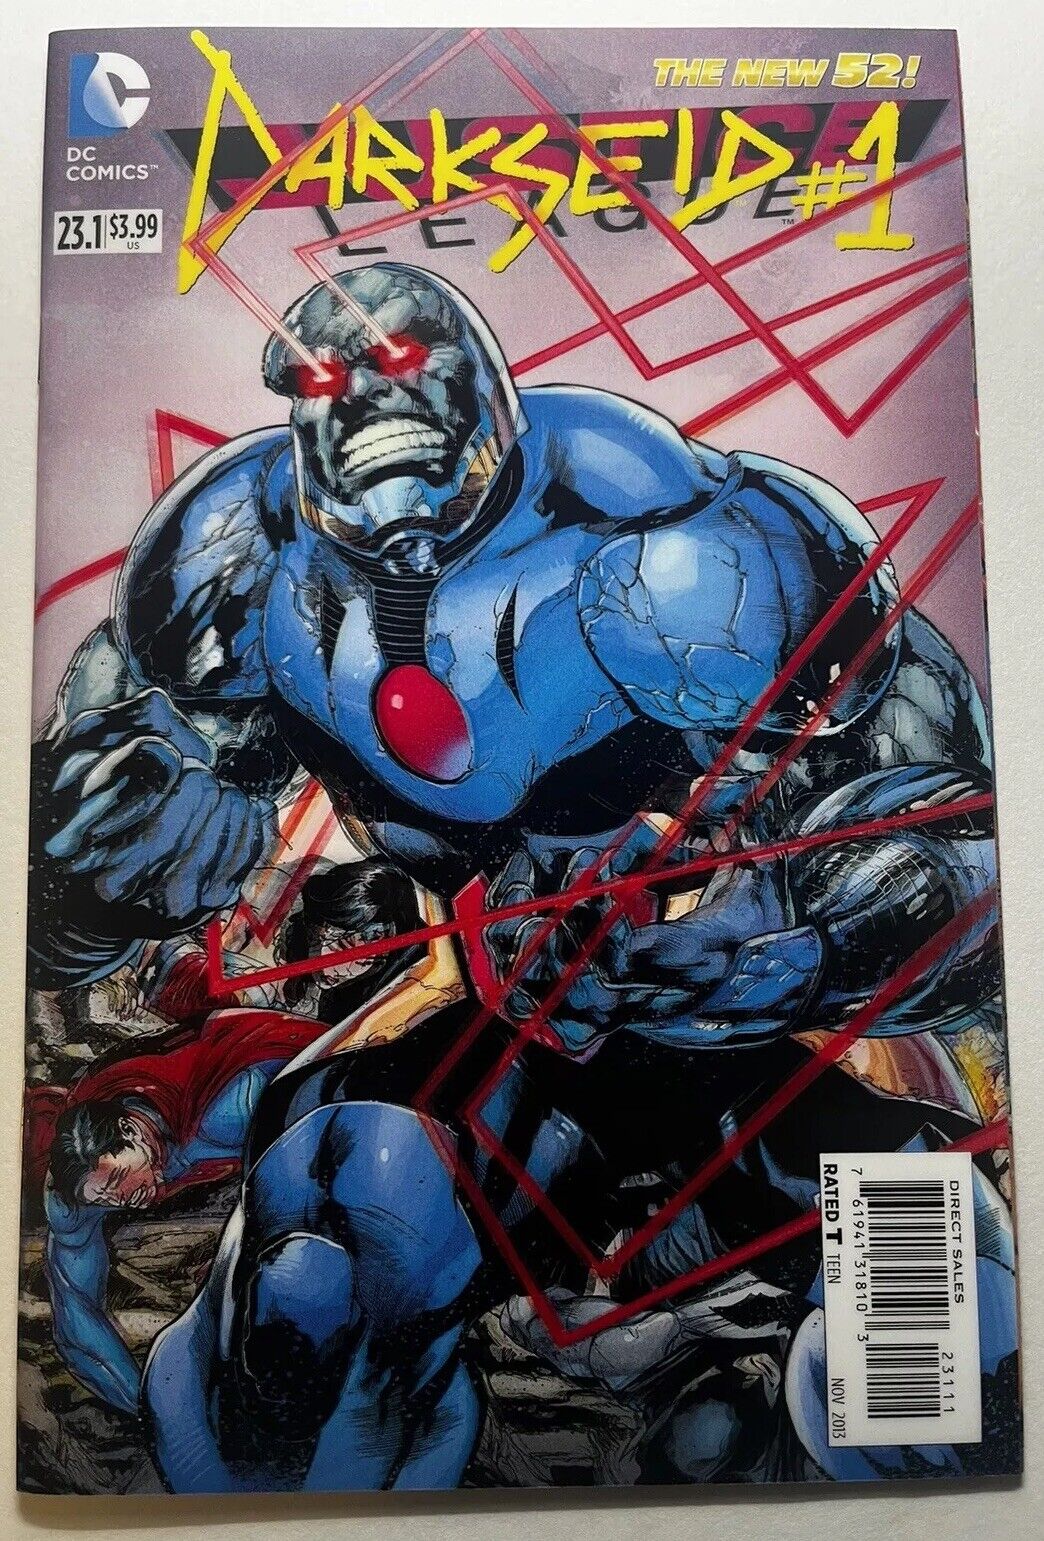 Justice League 23.1 Darkseid #1 - 3D Lenticular Cover